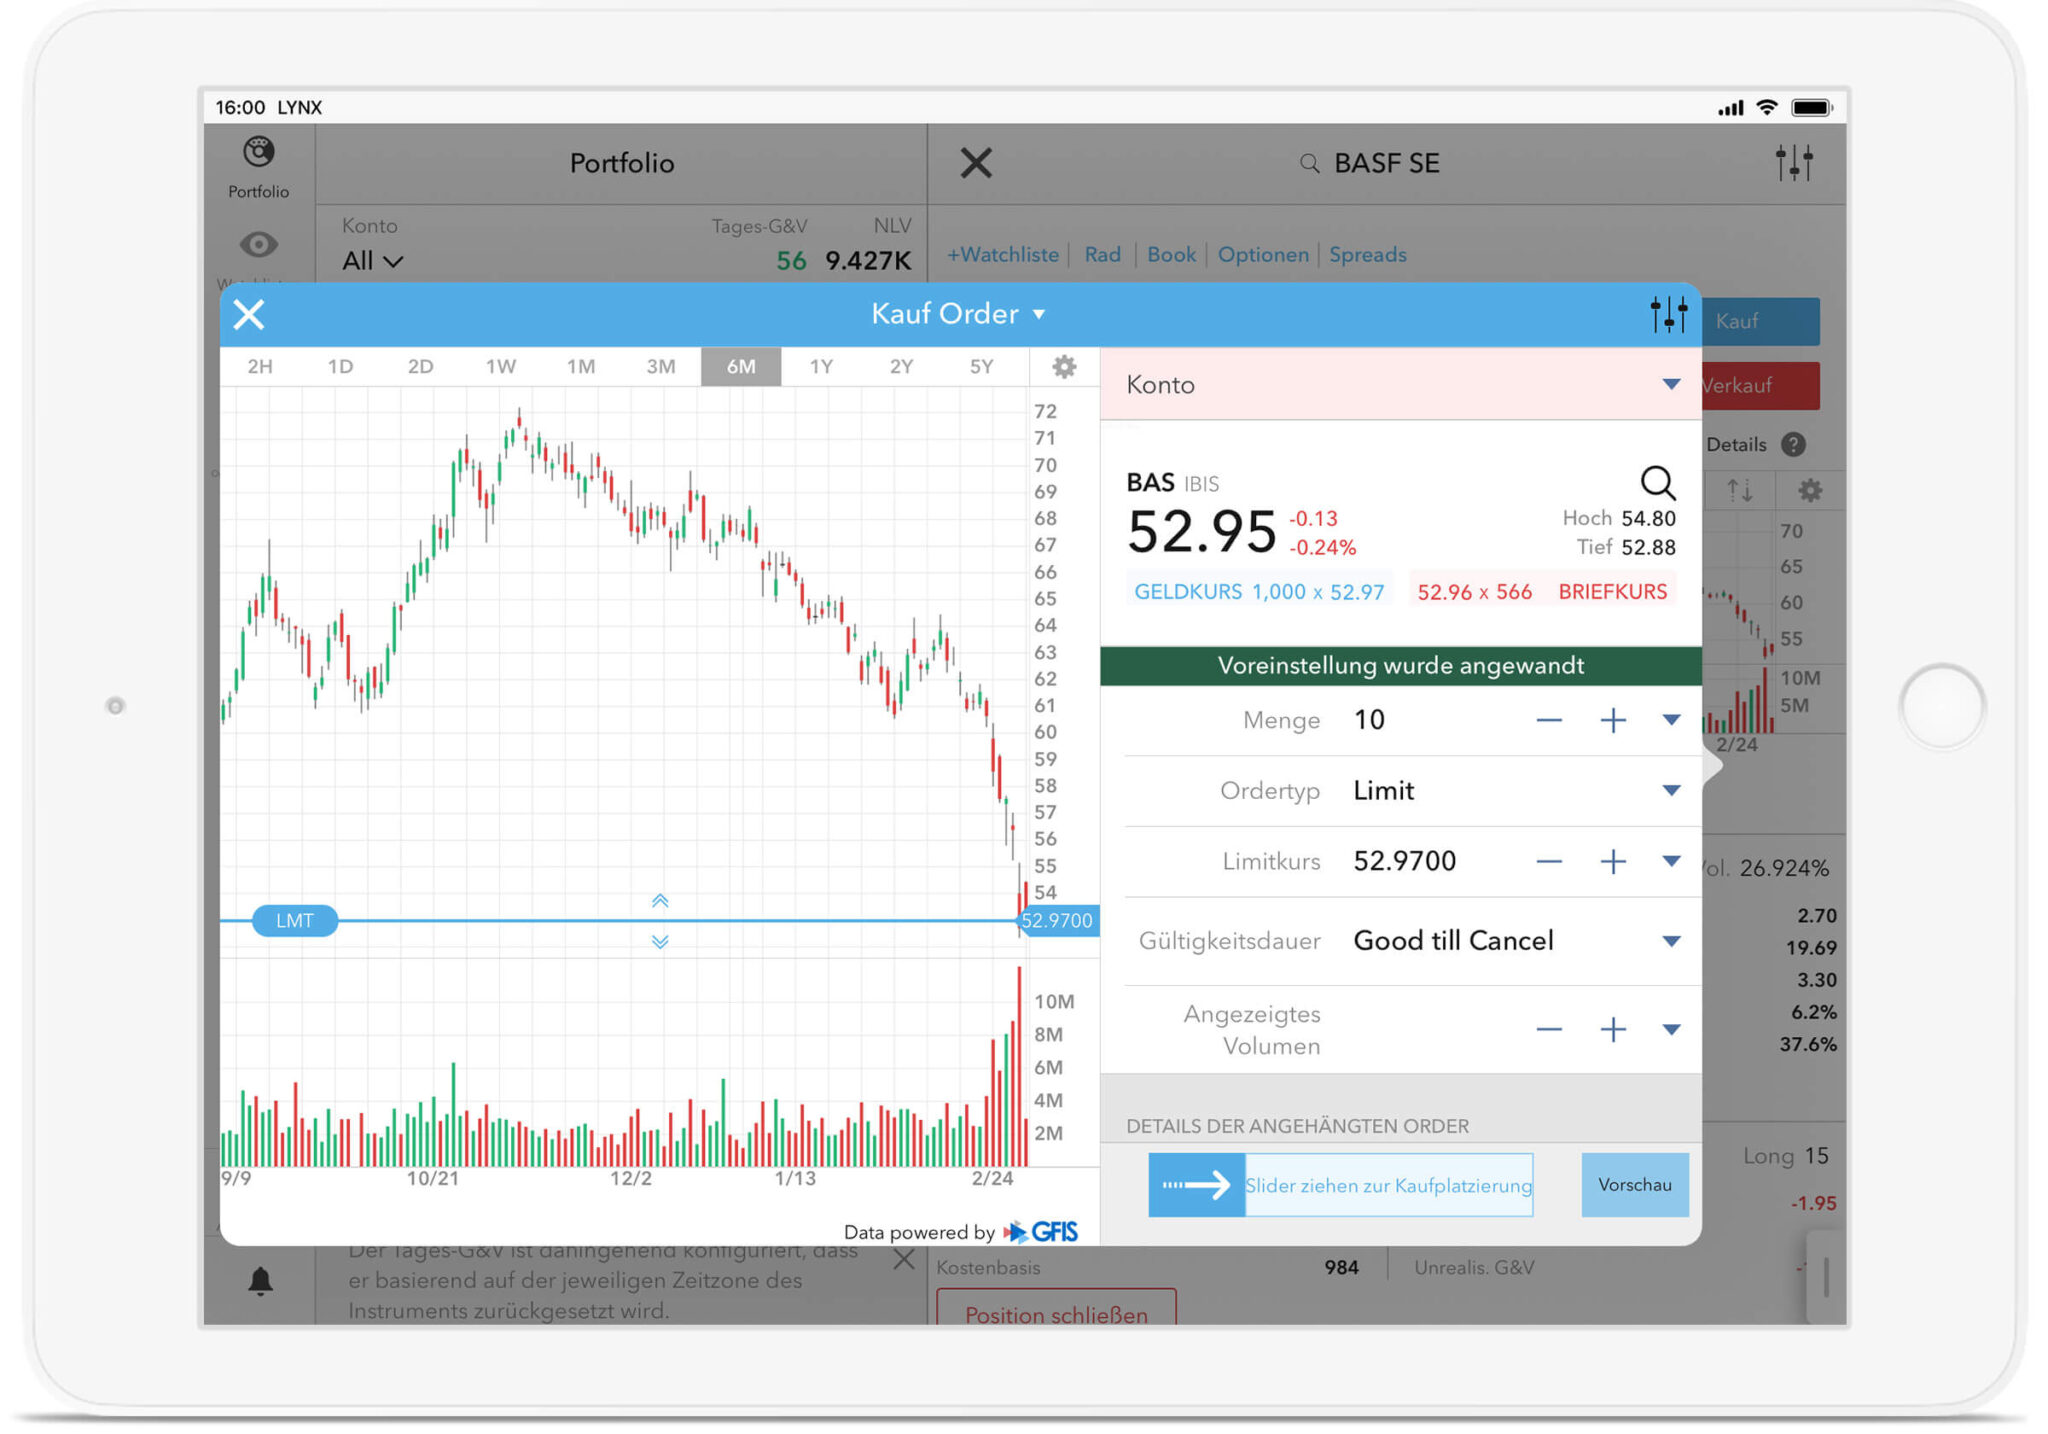 Ipad trading app